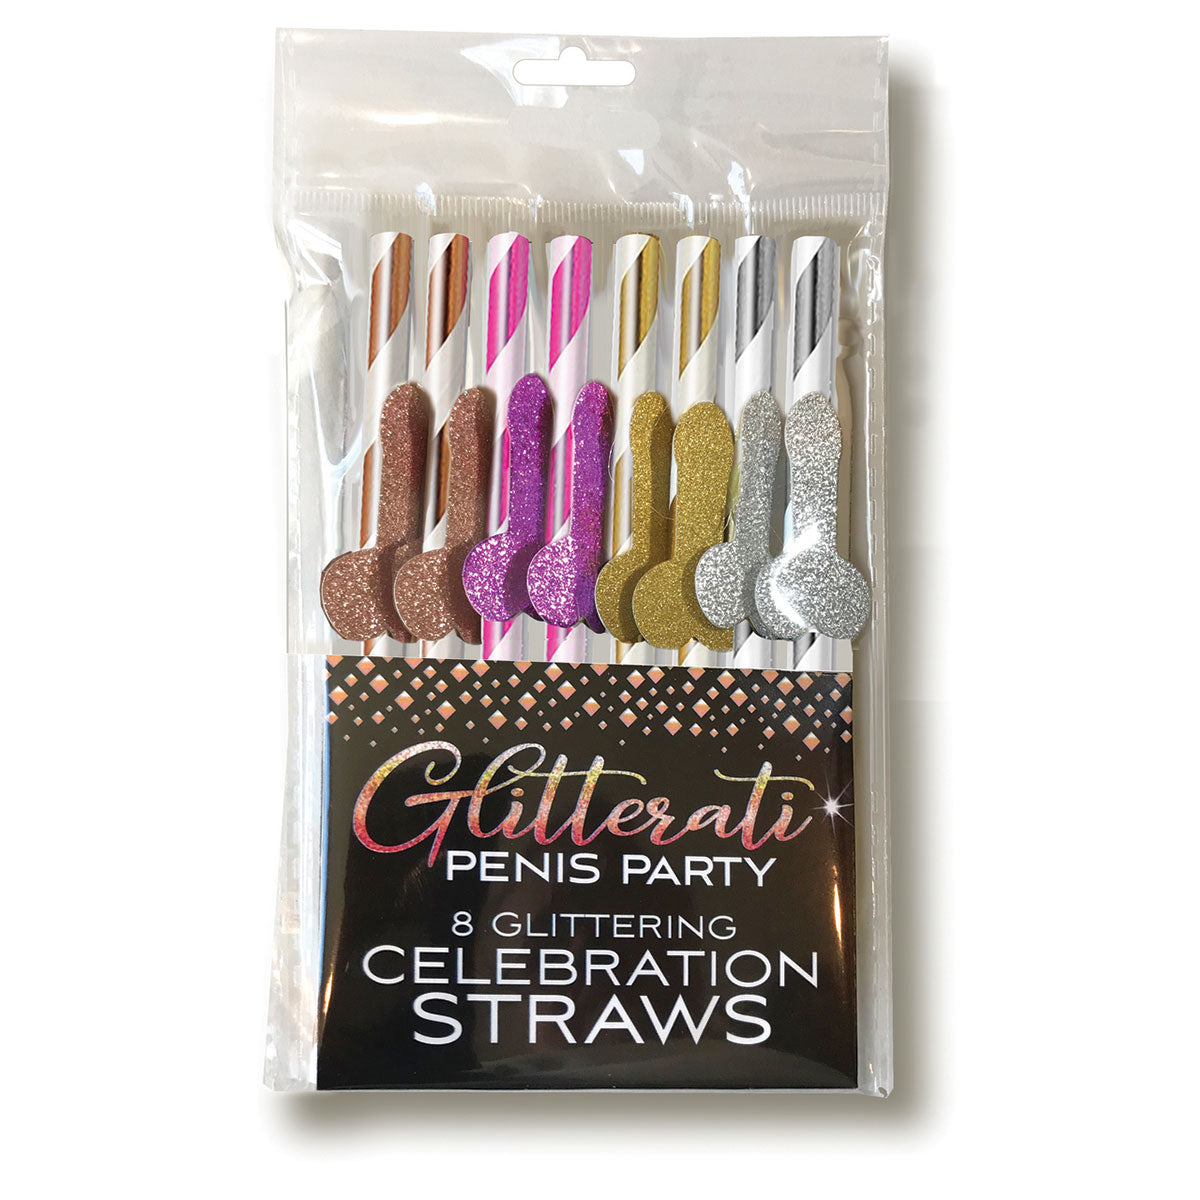 Glitterati Penis Party Cocktail Straws 8pk